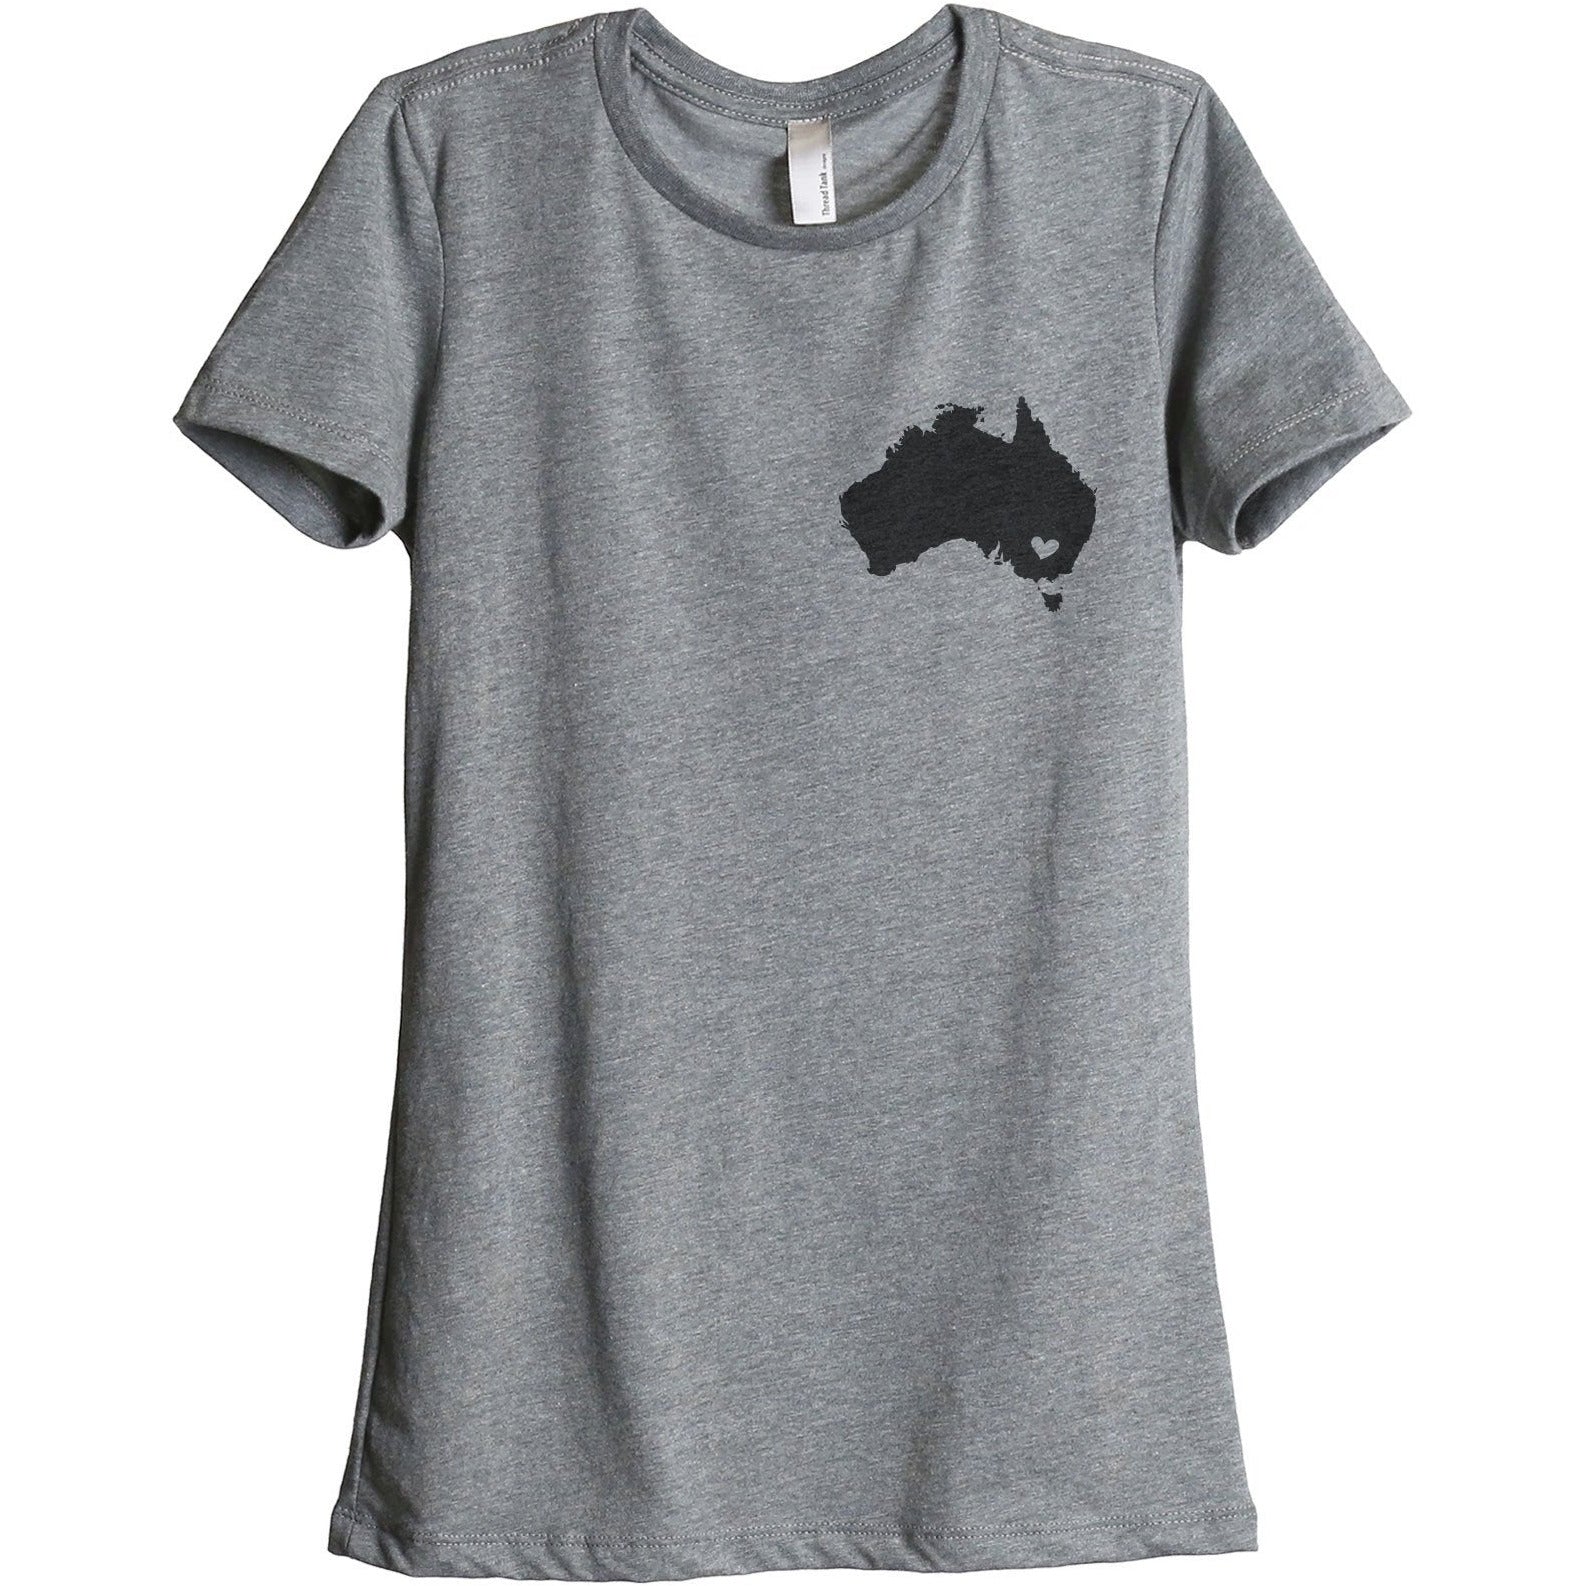 Australia Heart Women's Relaxed Crewneck T-Shirt Top Tee Heather Grey